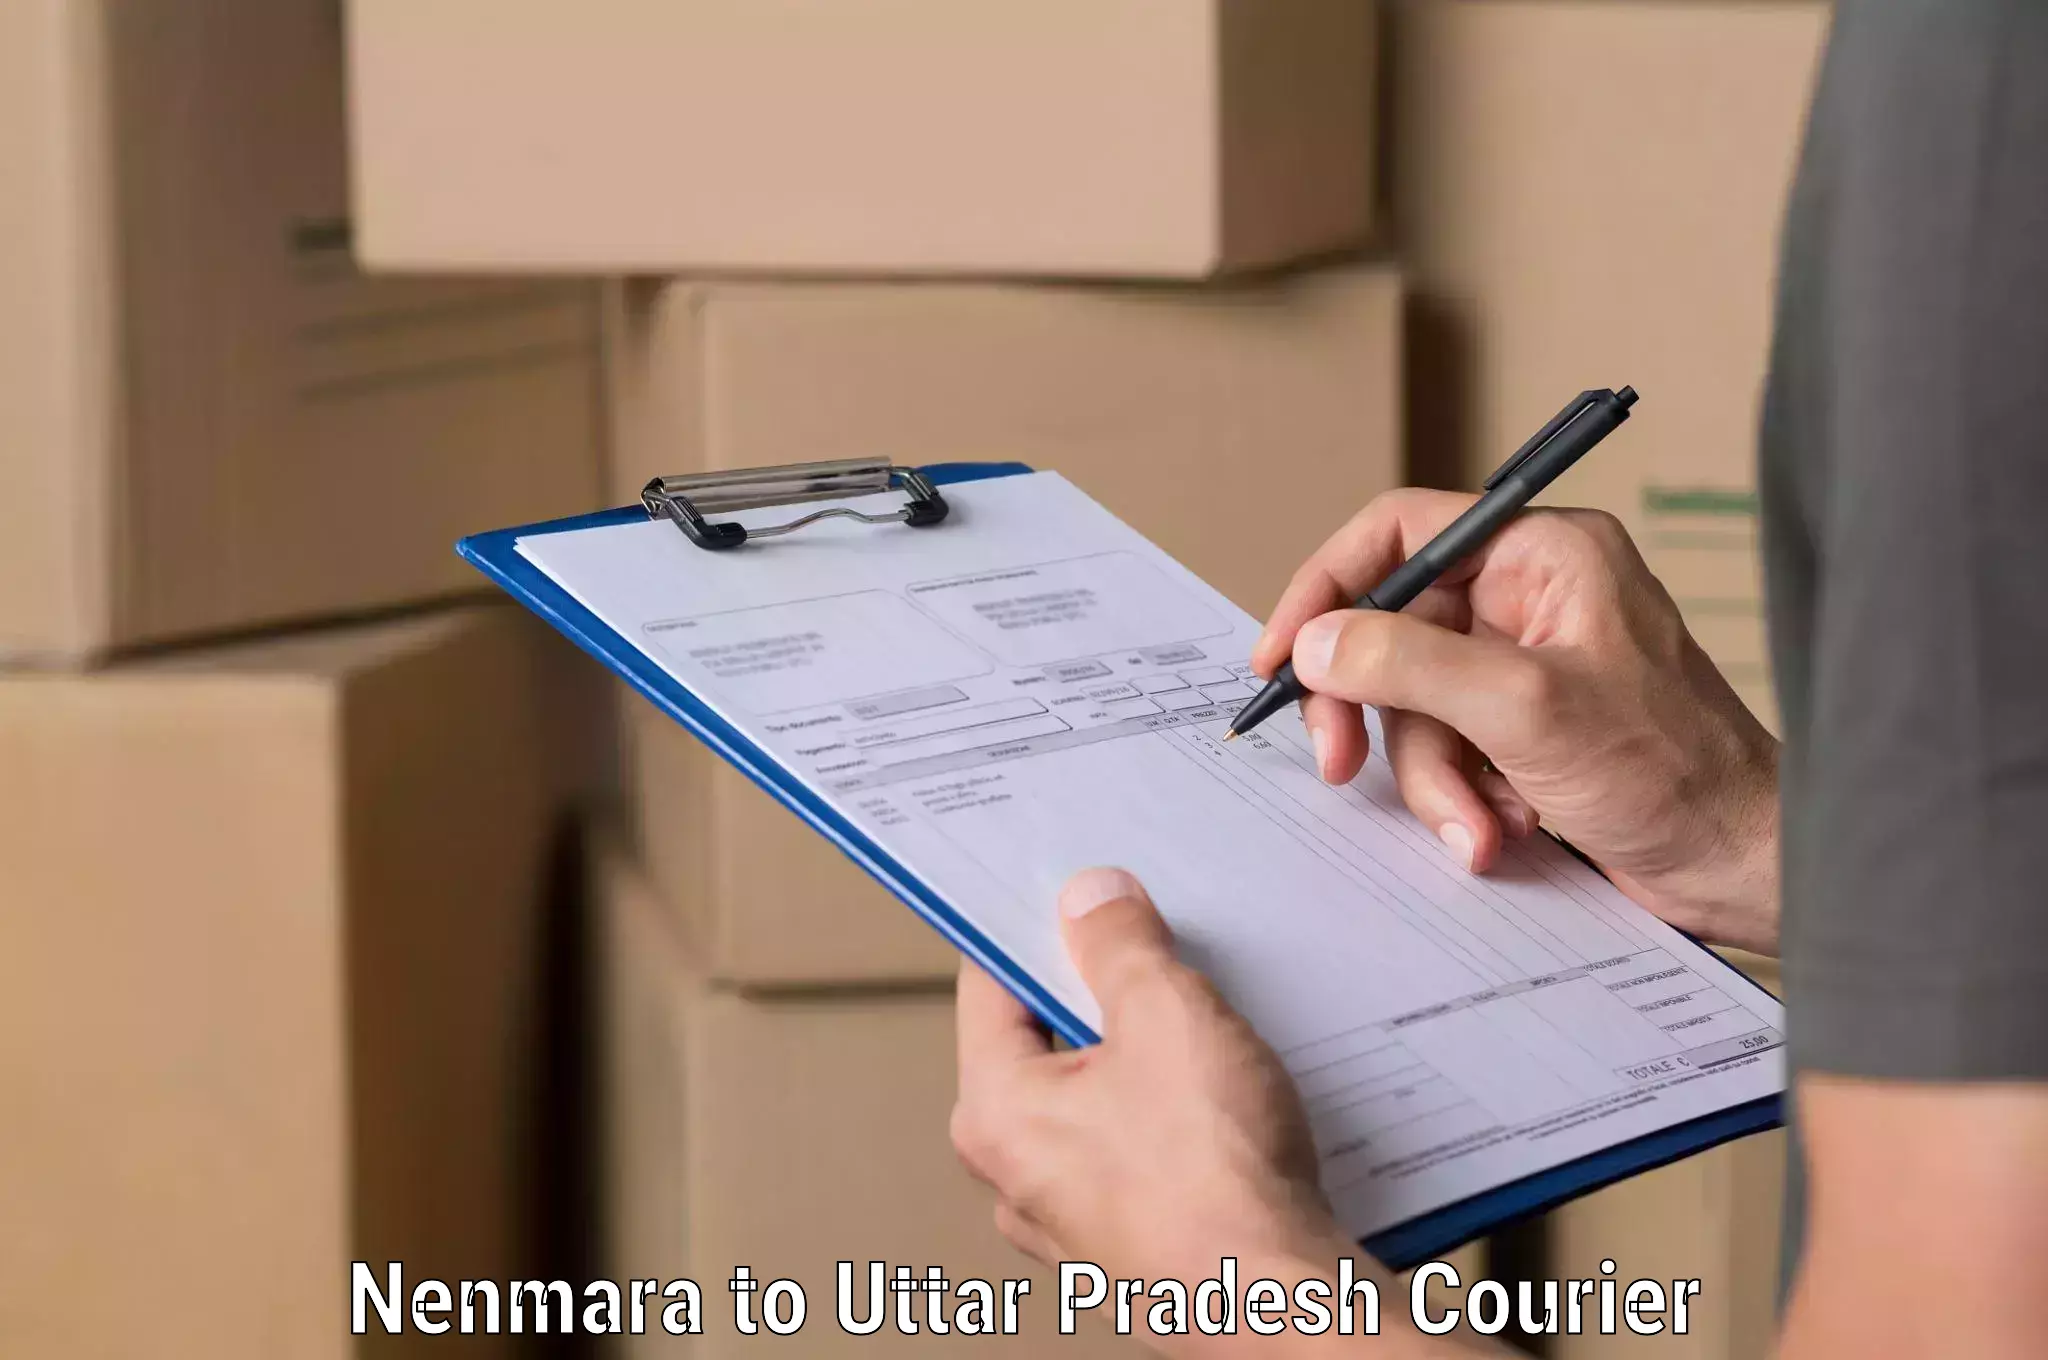 Courier service comparison Nenmara to Sahatwar